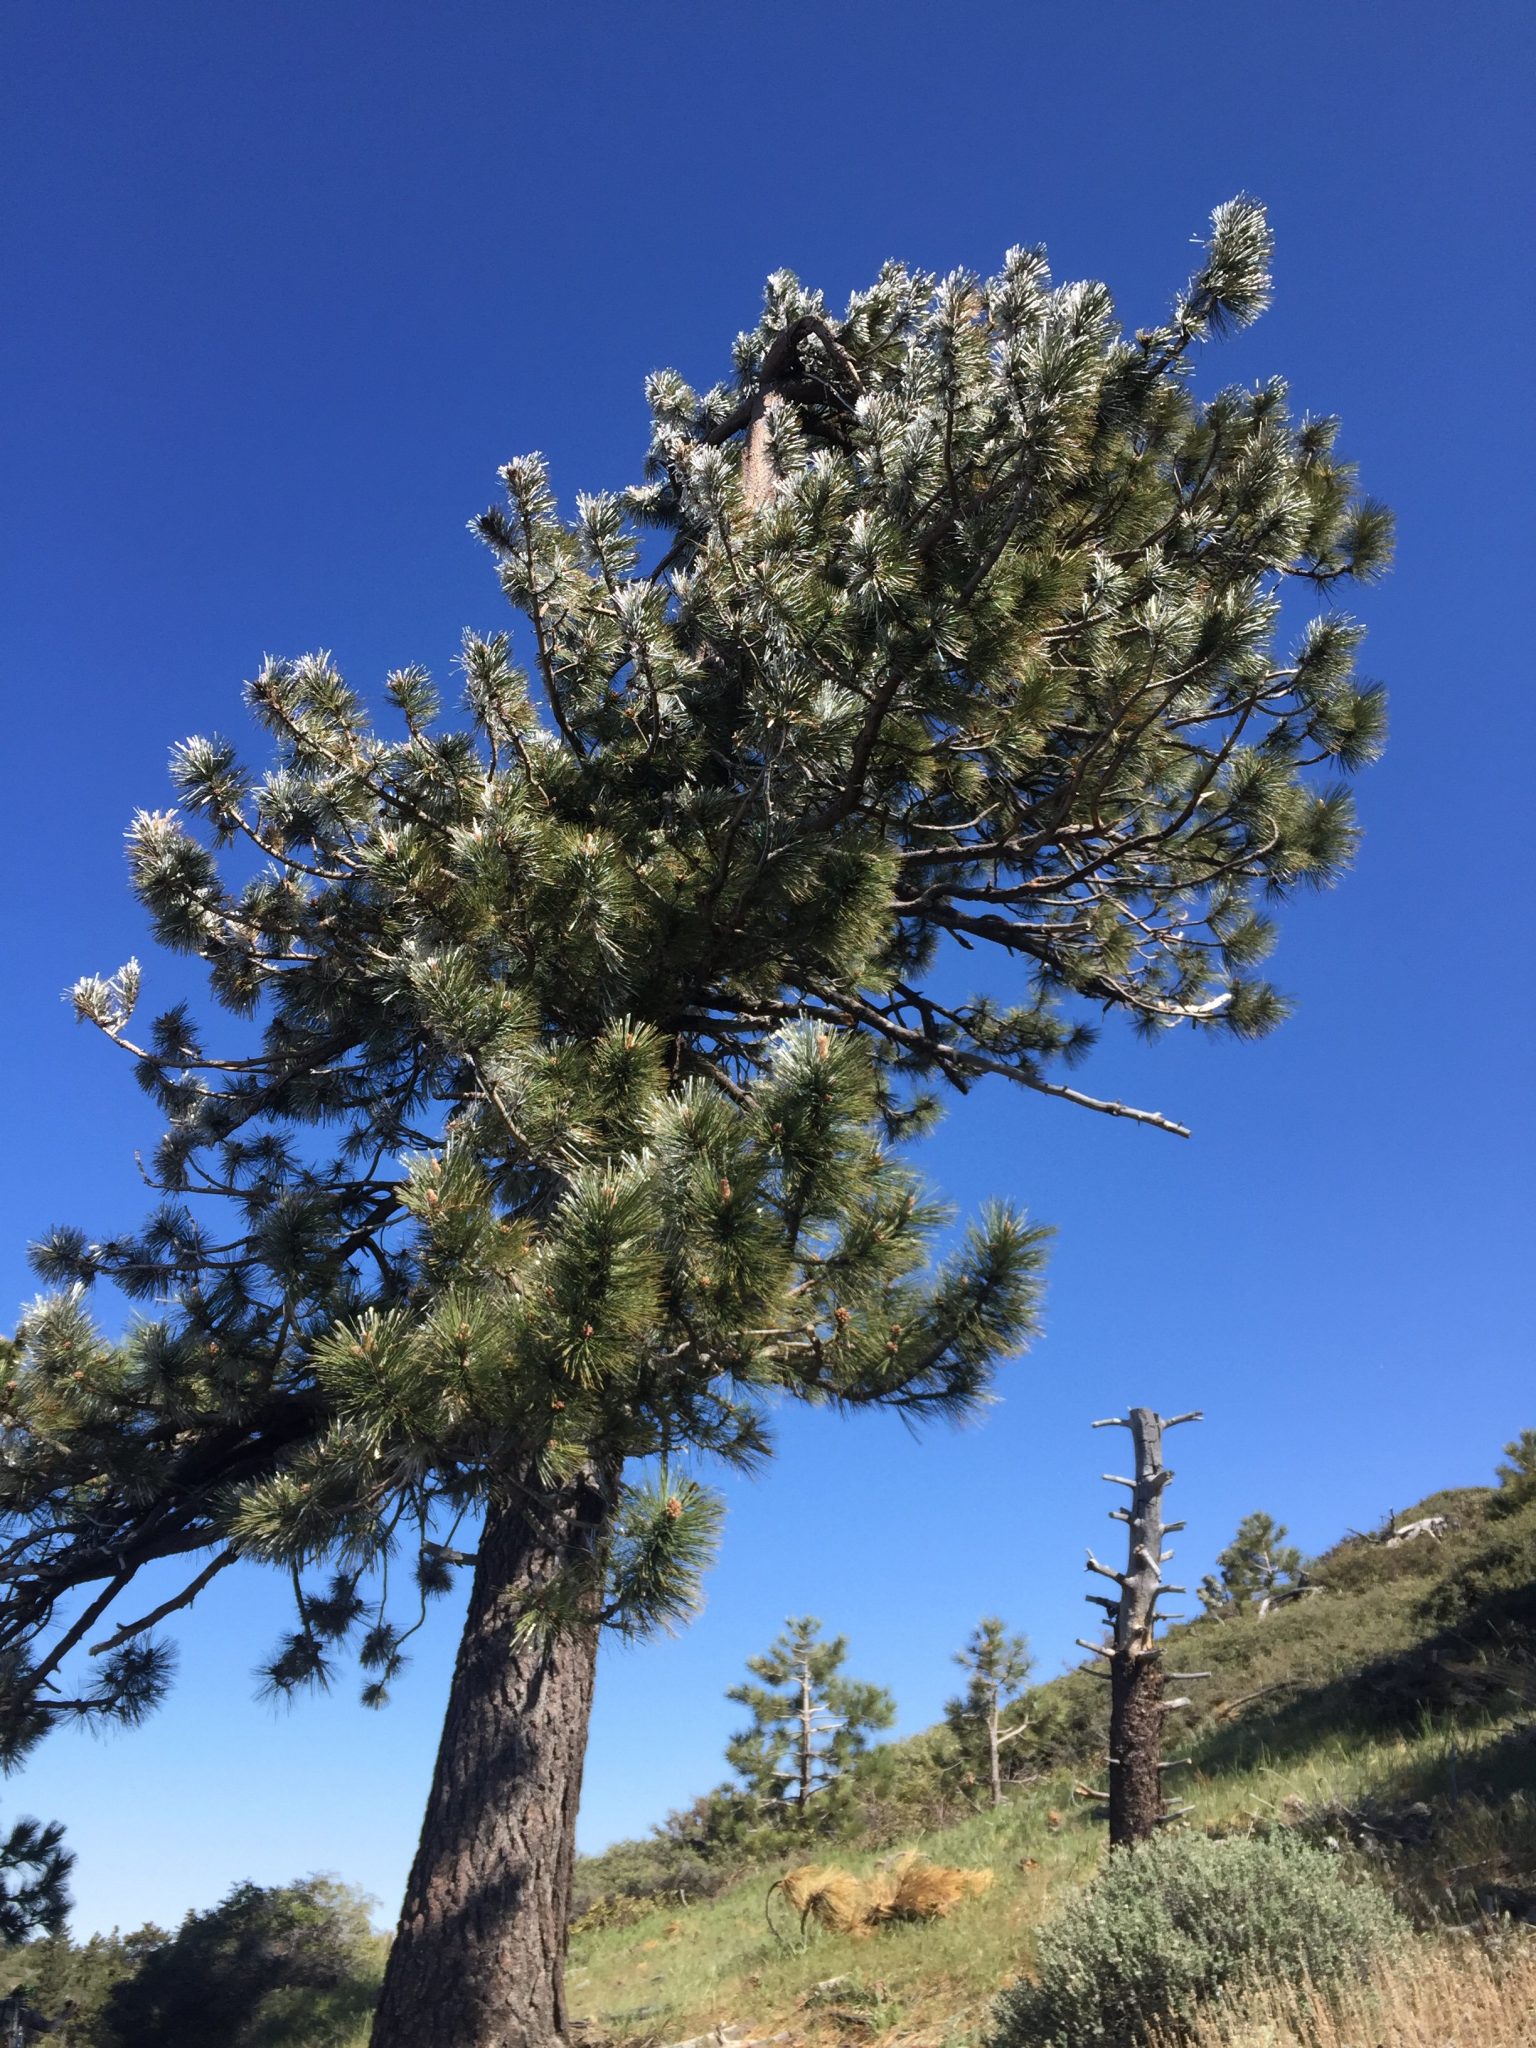 A frosty pine